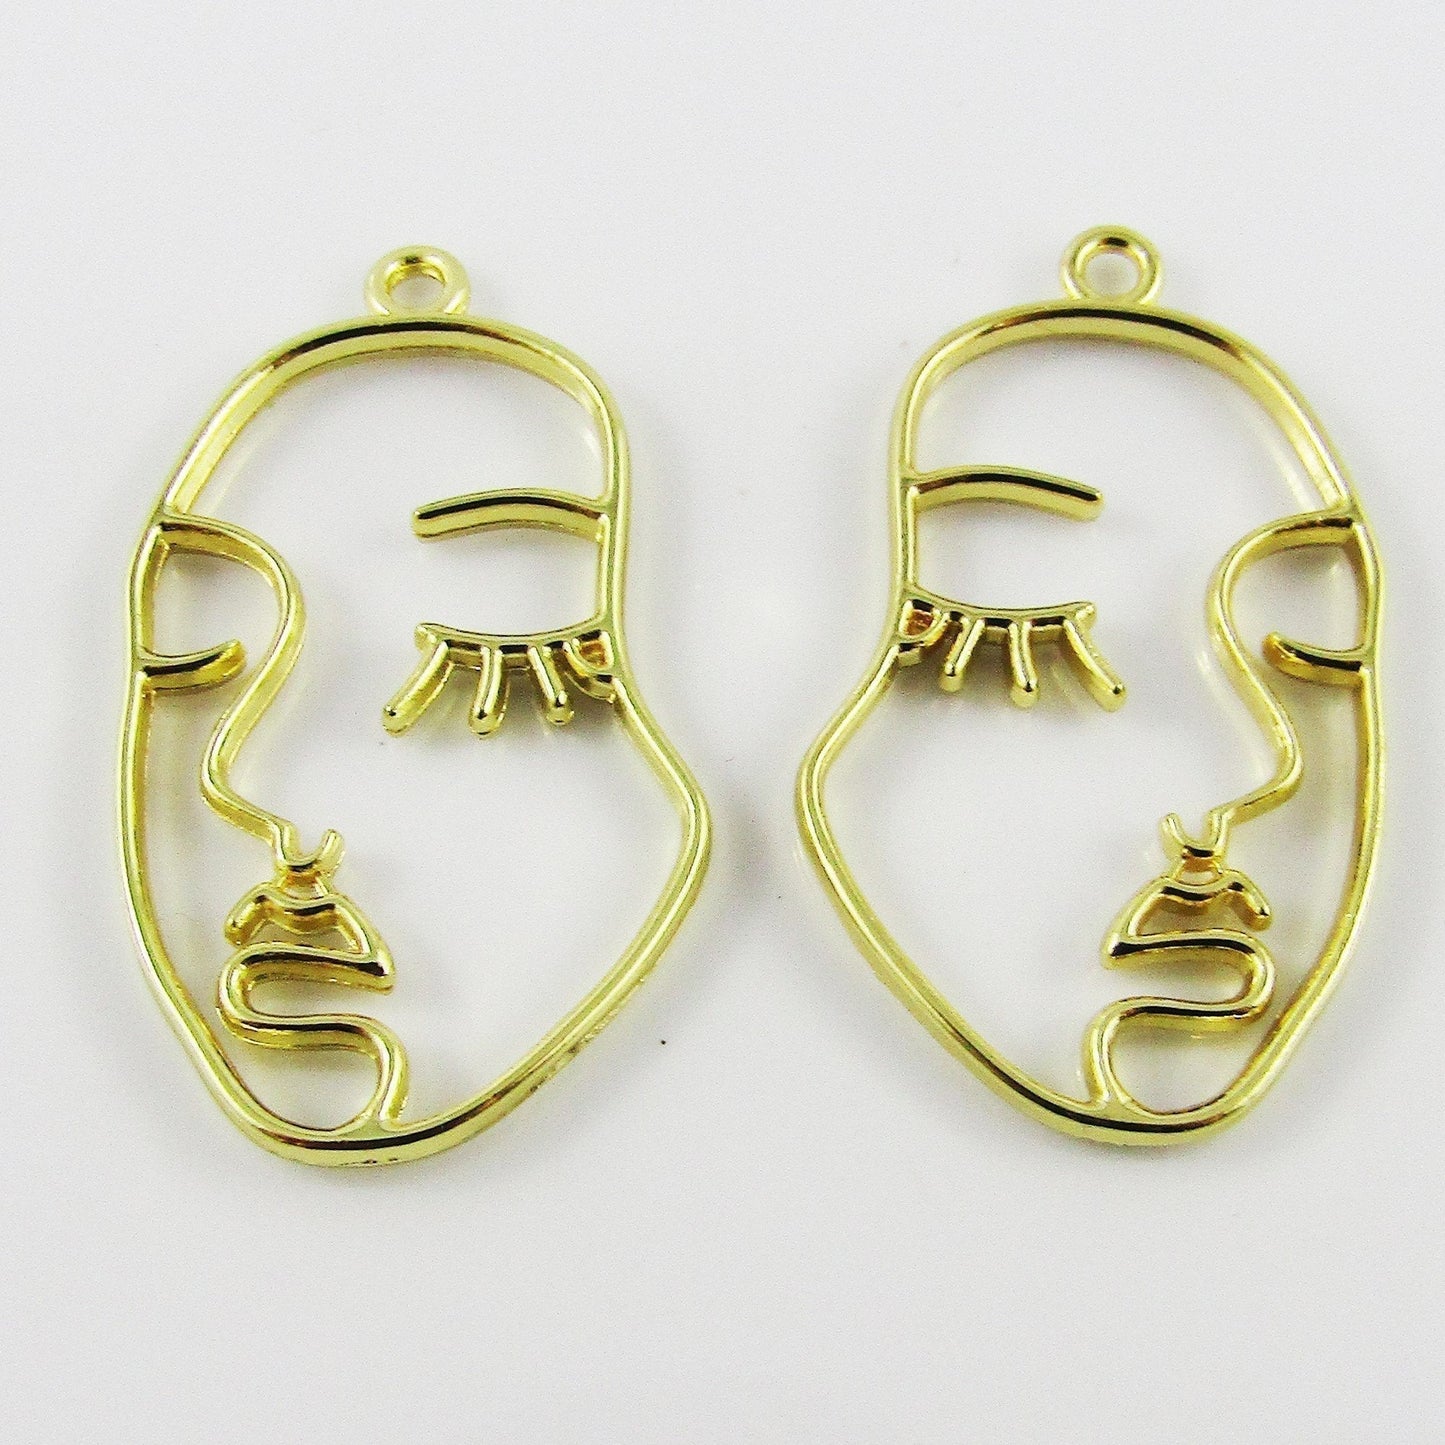 6pcs Abstract Face Winking Girl Charm Pendant Gold Plate 38x22mm Open Bezel